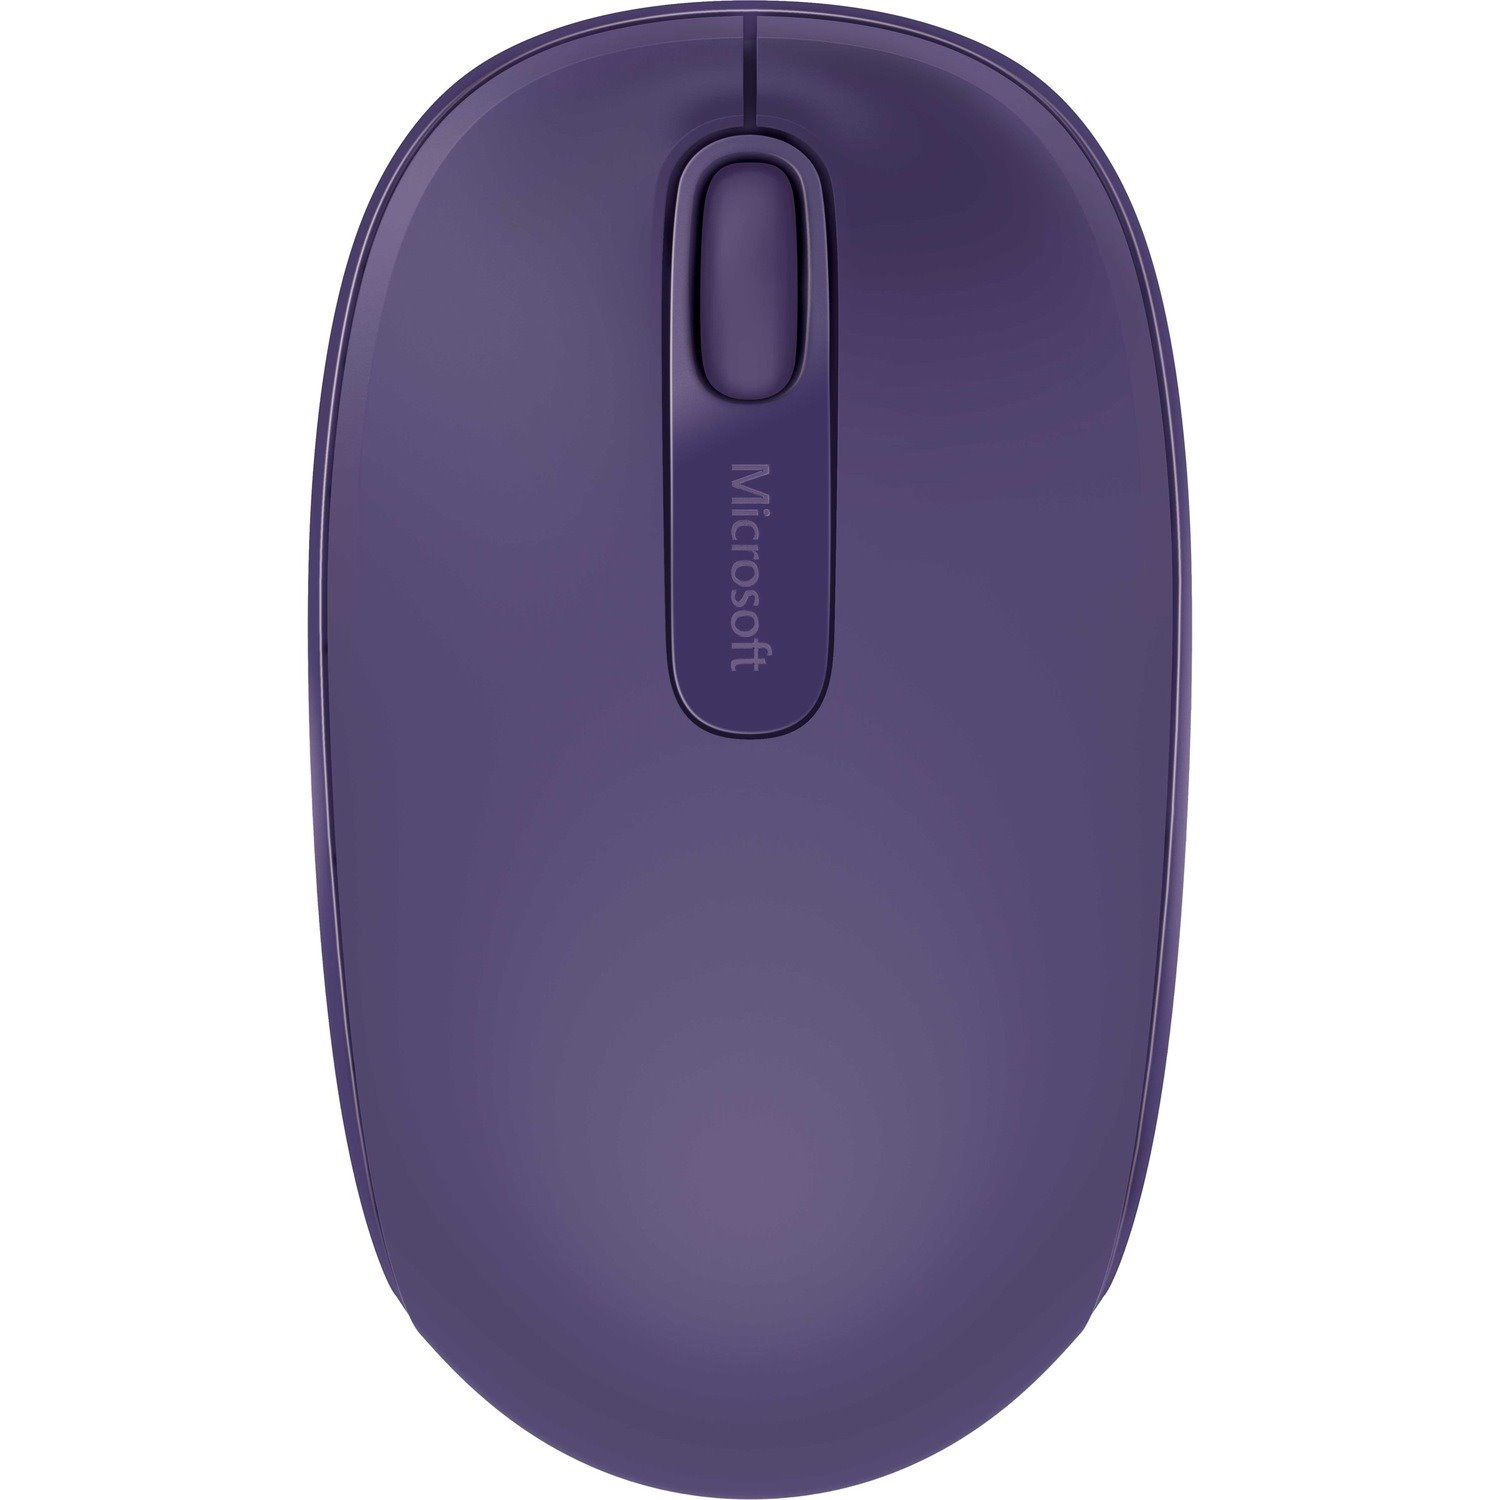 Microsoft 1850 Mouse - Radio Frequency - USB - Optical - Purple